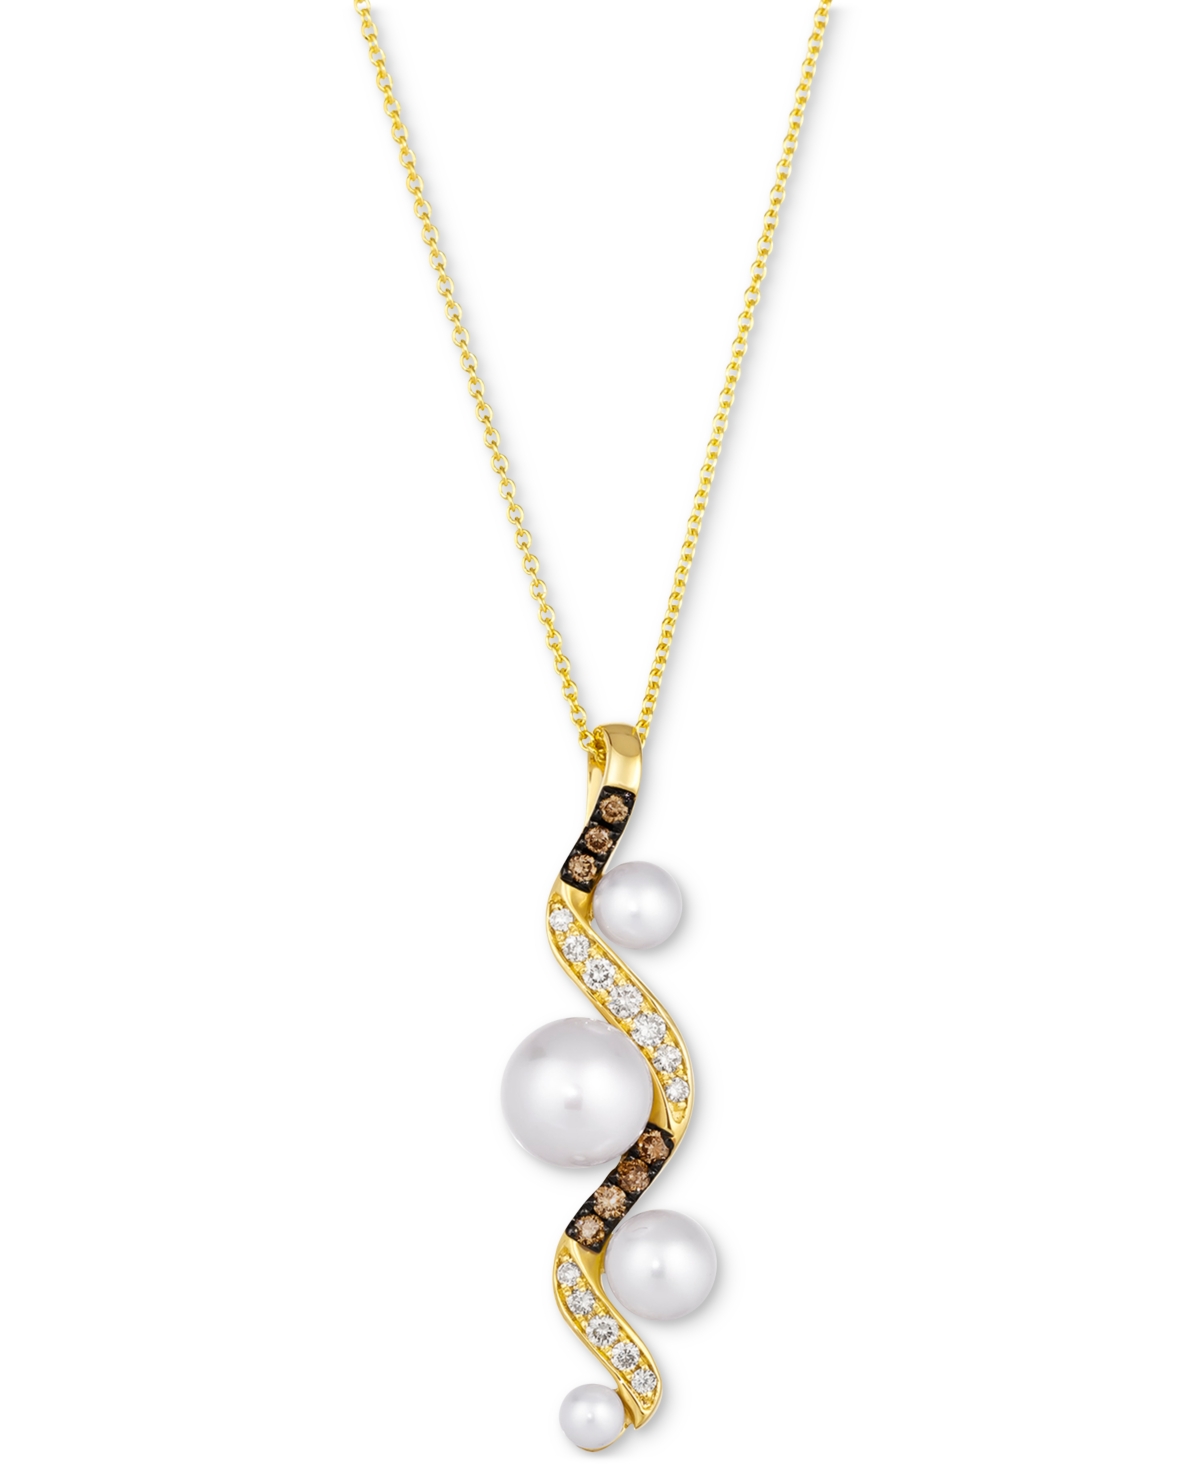 Vanilla Pearls (3-8mm) & Diamond (1/4 ct. t.w.) Curvy Adjustable 20" Pendant Necklace in 14k Gold - K Honey Gold Pendant